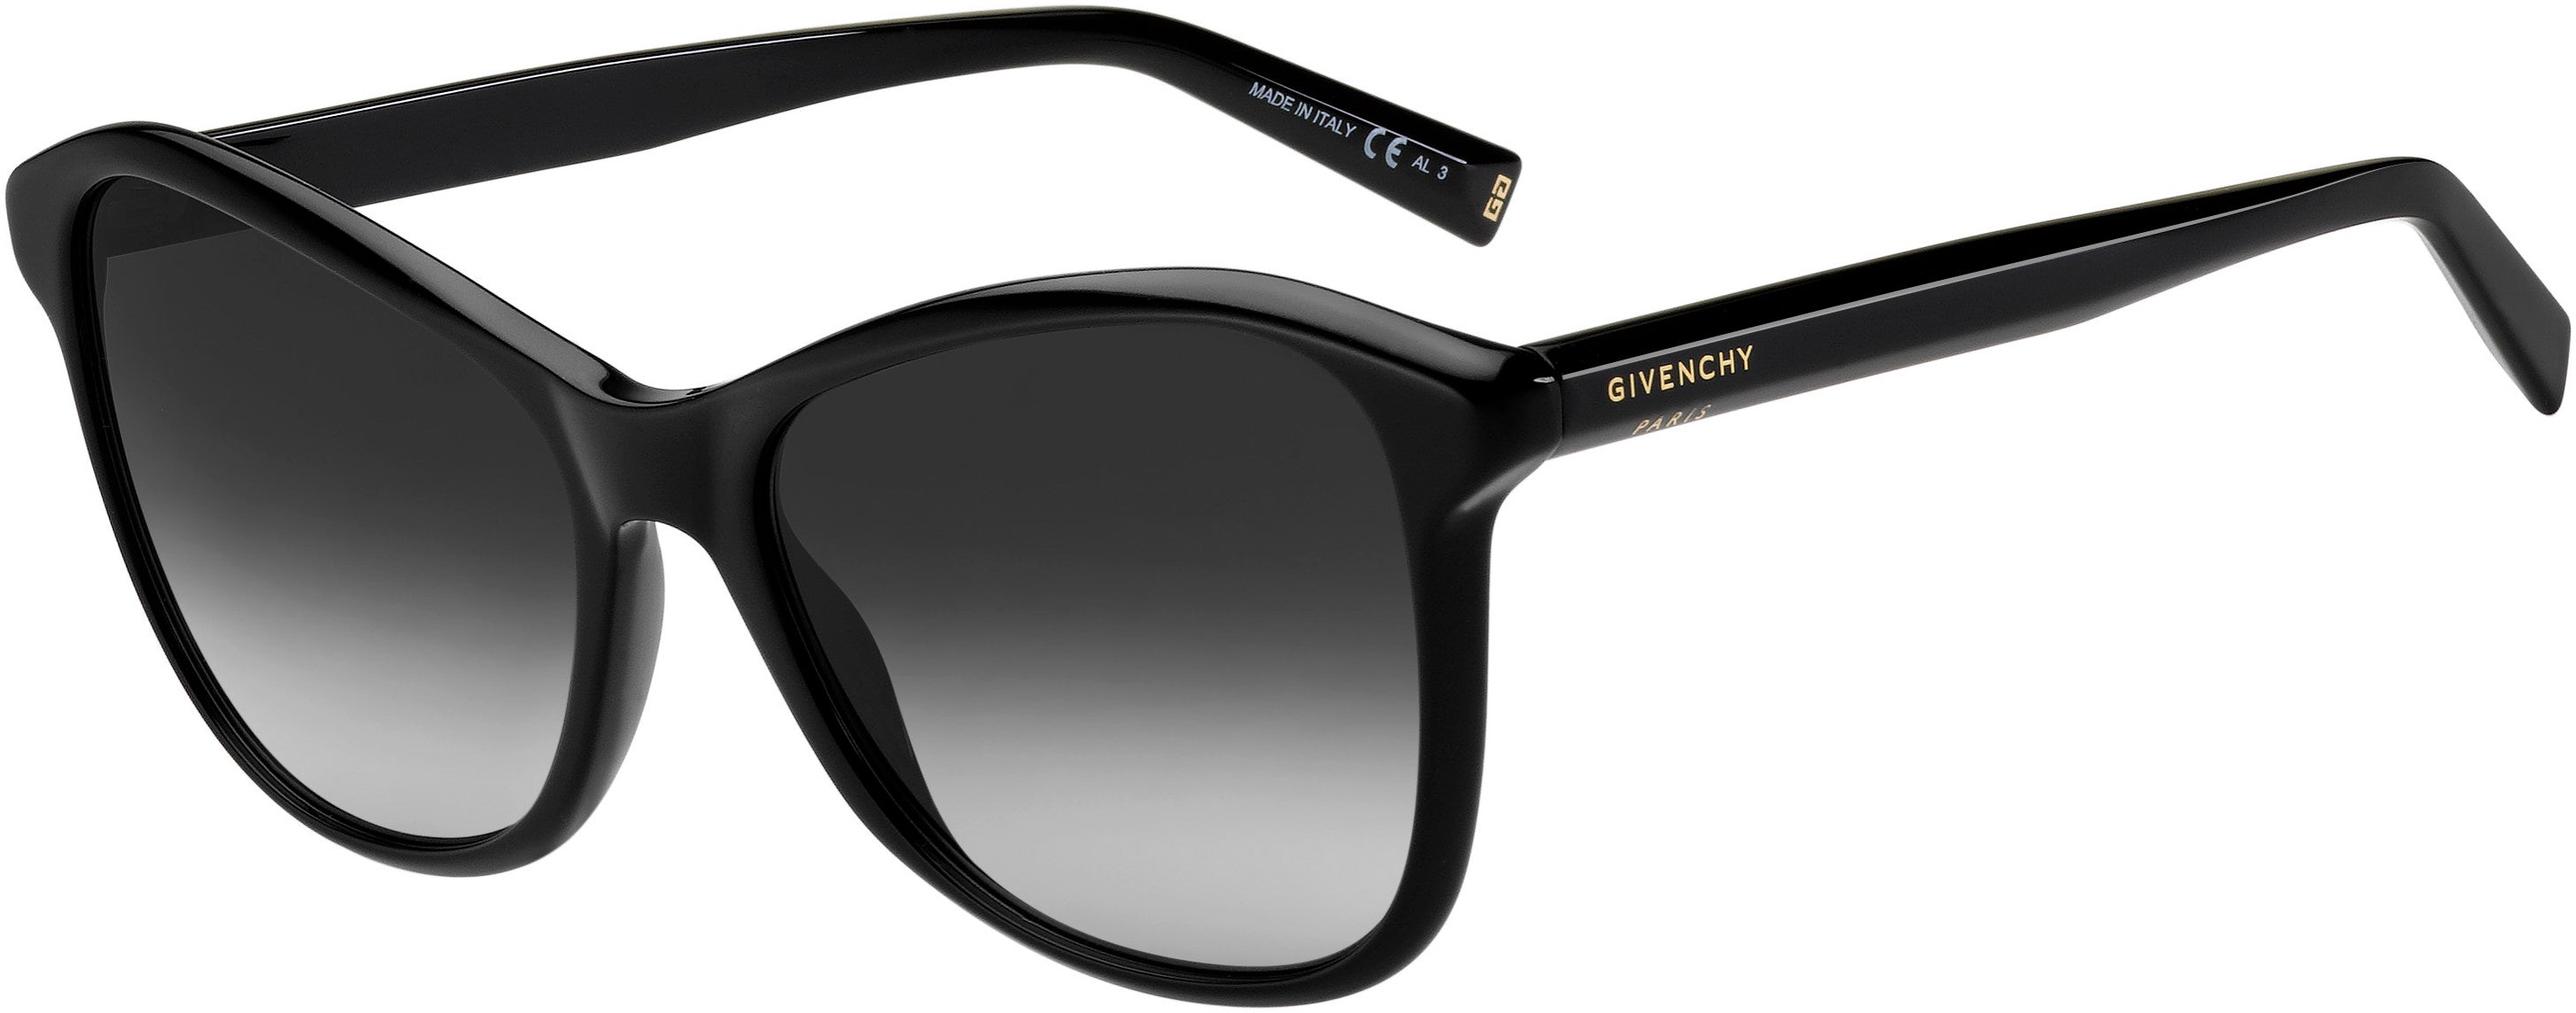  Givenchy 7198/S Cat Eye/butterfly Sunglasses 0807-0807  Black (9O Dark Gray Gradient)